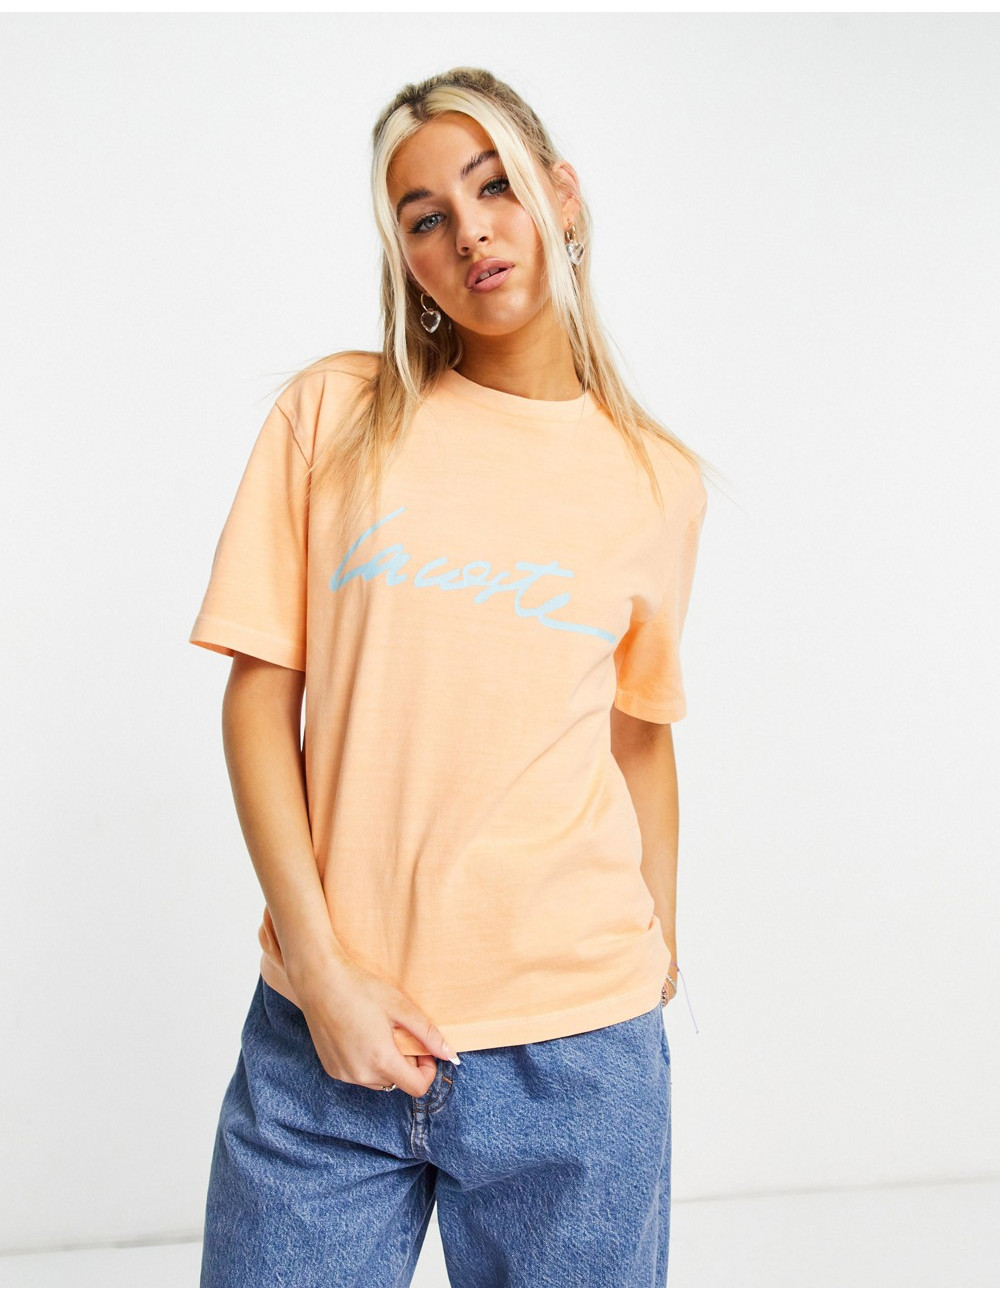 Lacoste logo t-shirt in peach